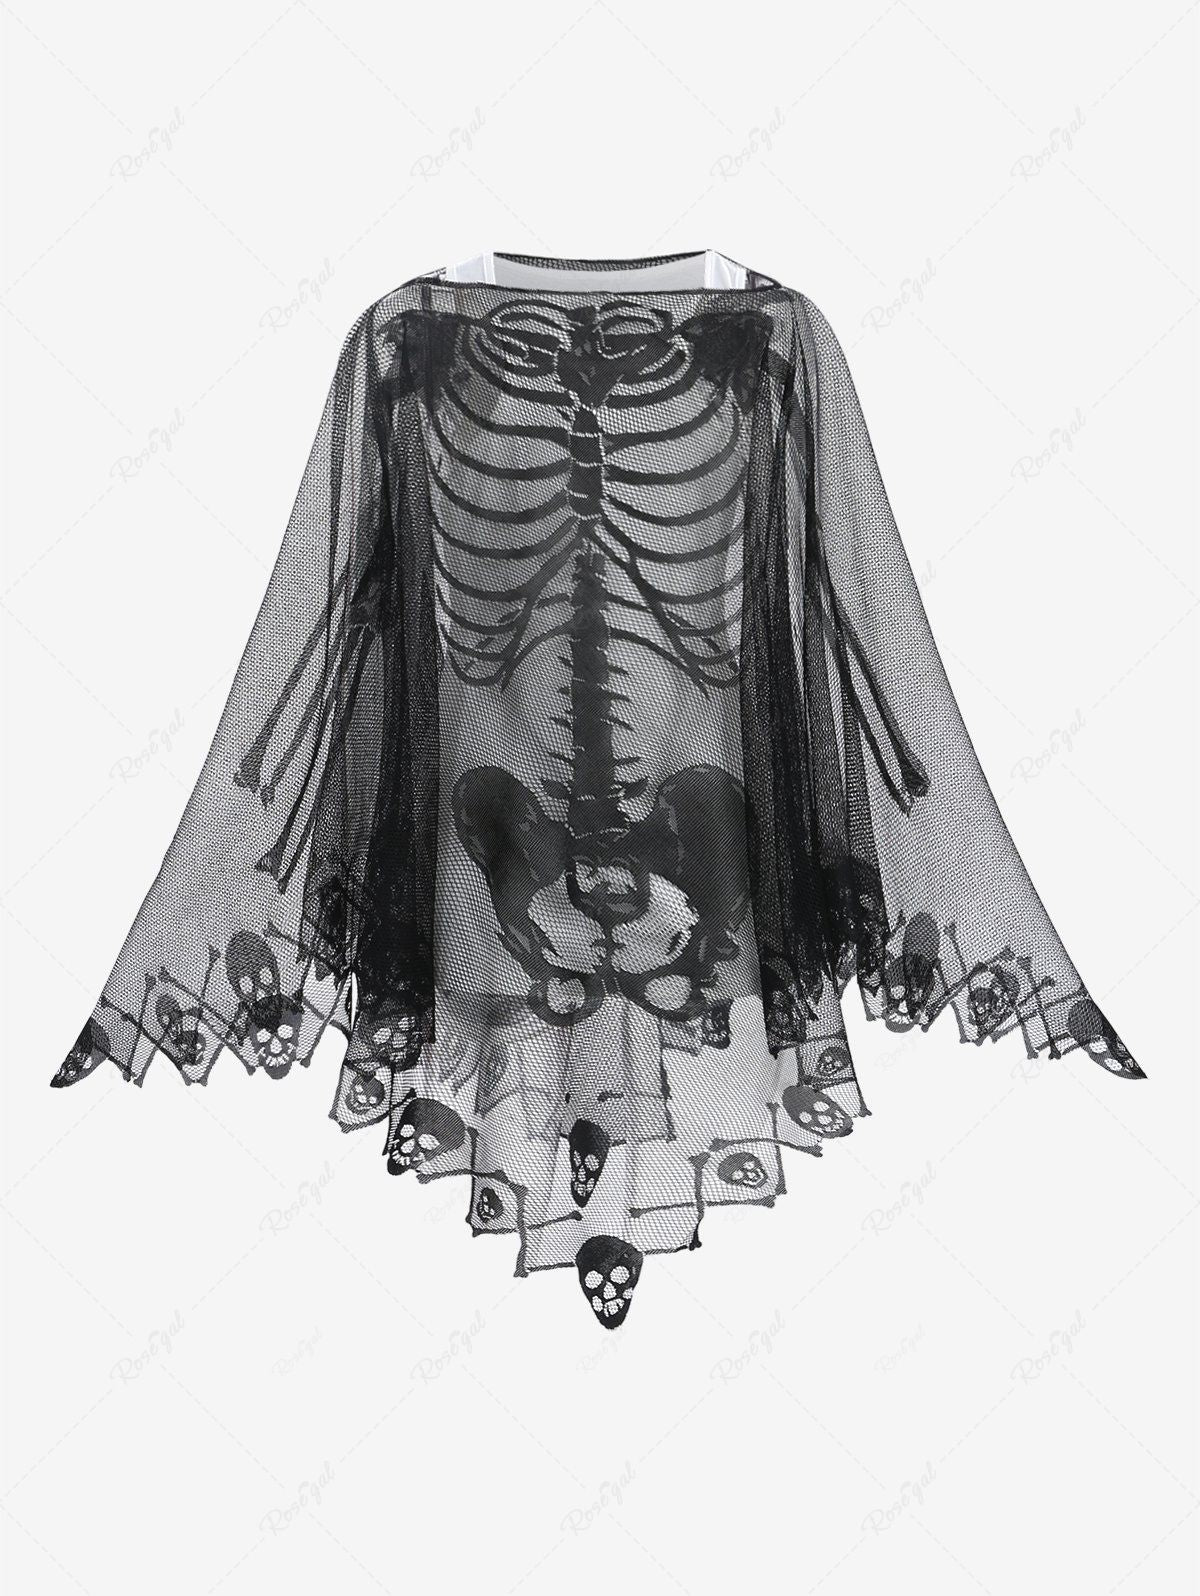 Halloween Costume Gothic Skull Skeleton Mesh Crochet Asymmetric Poncho Cloak Cape